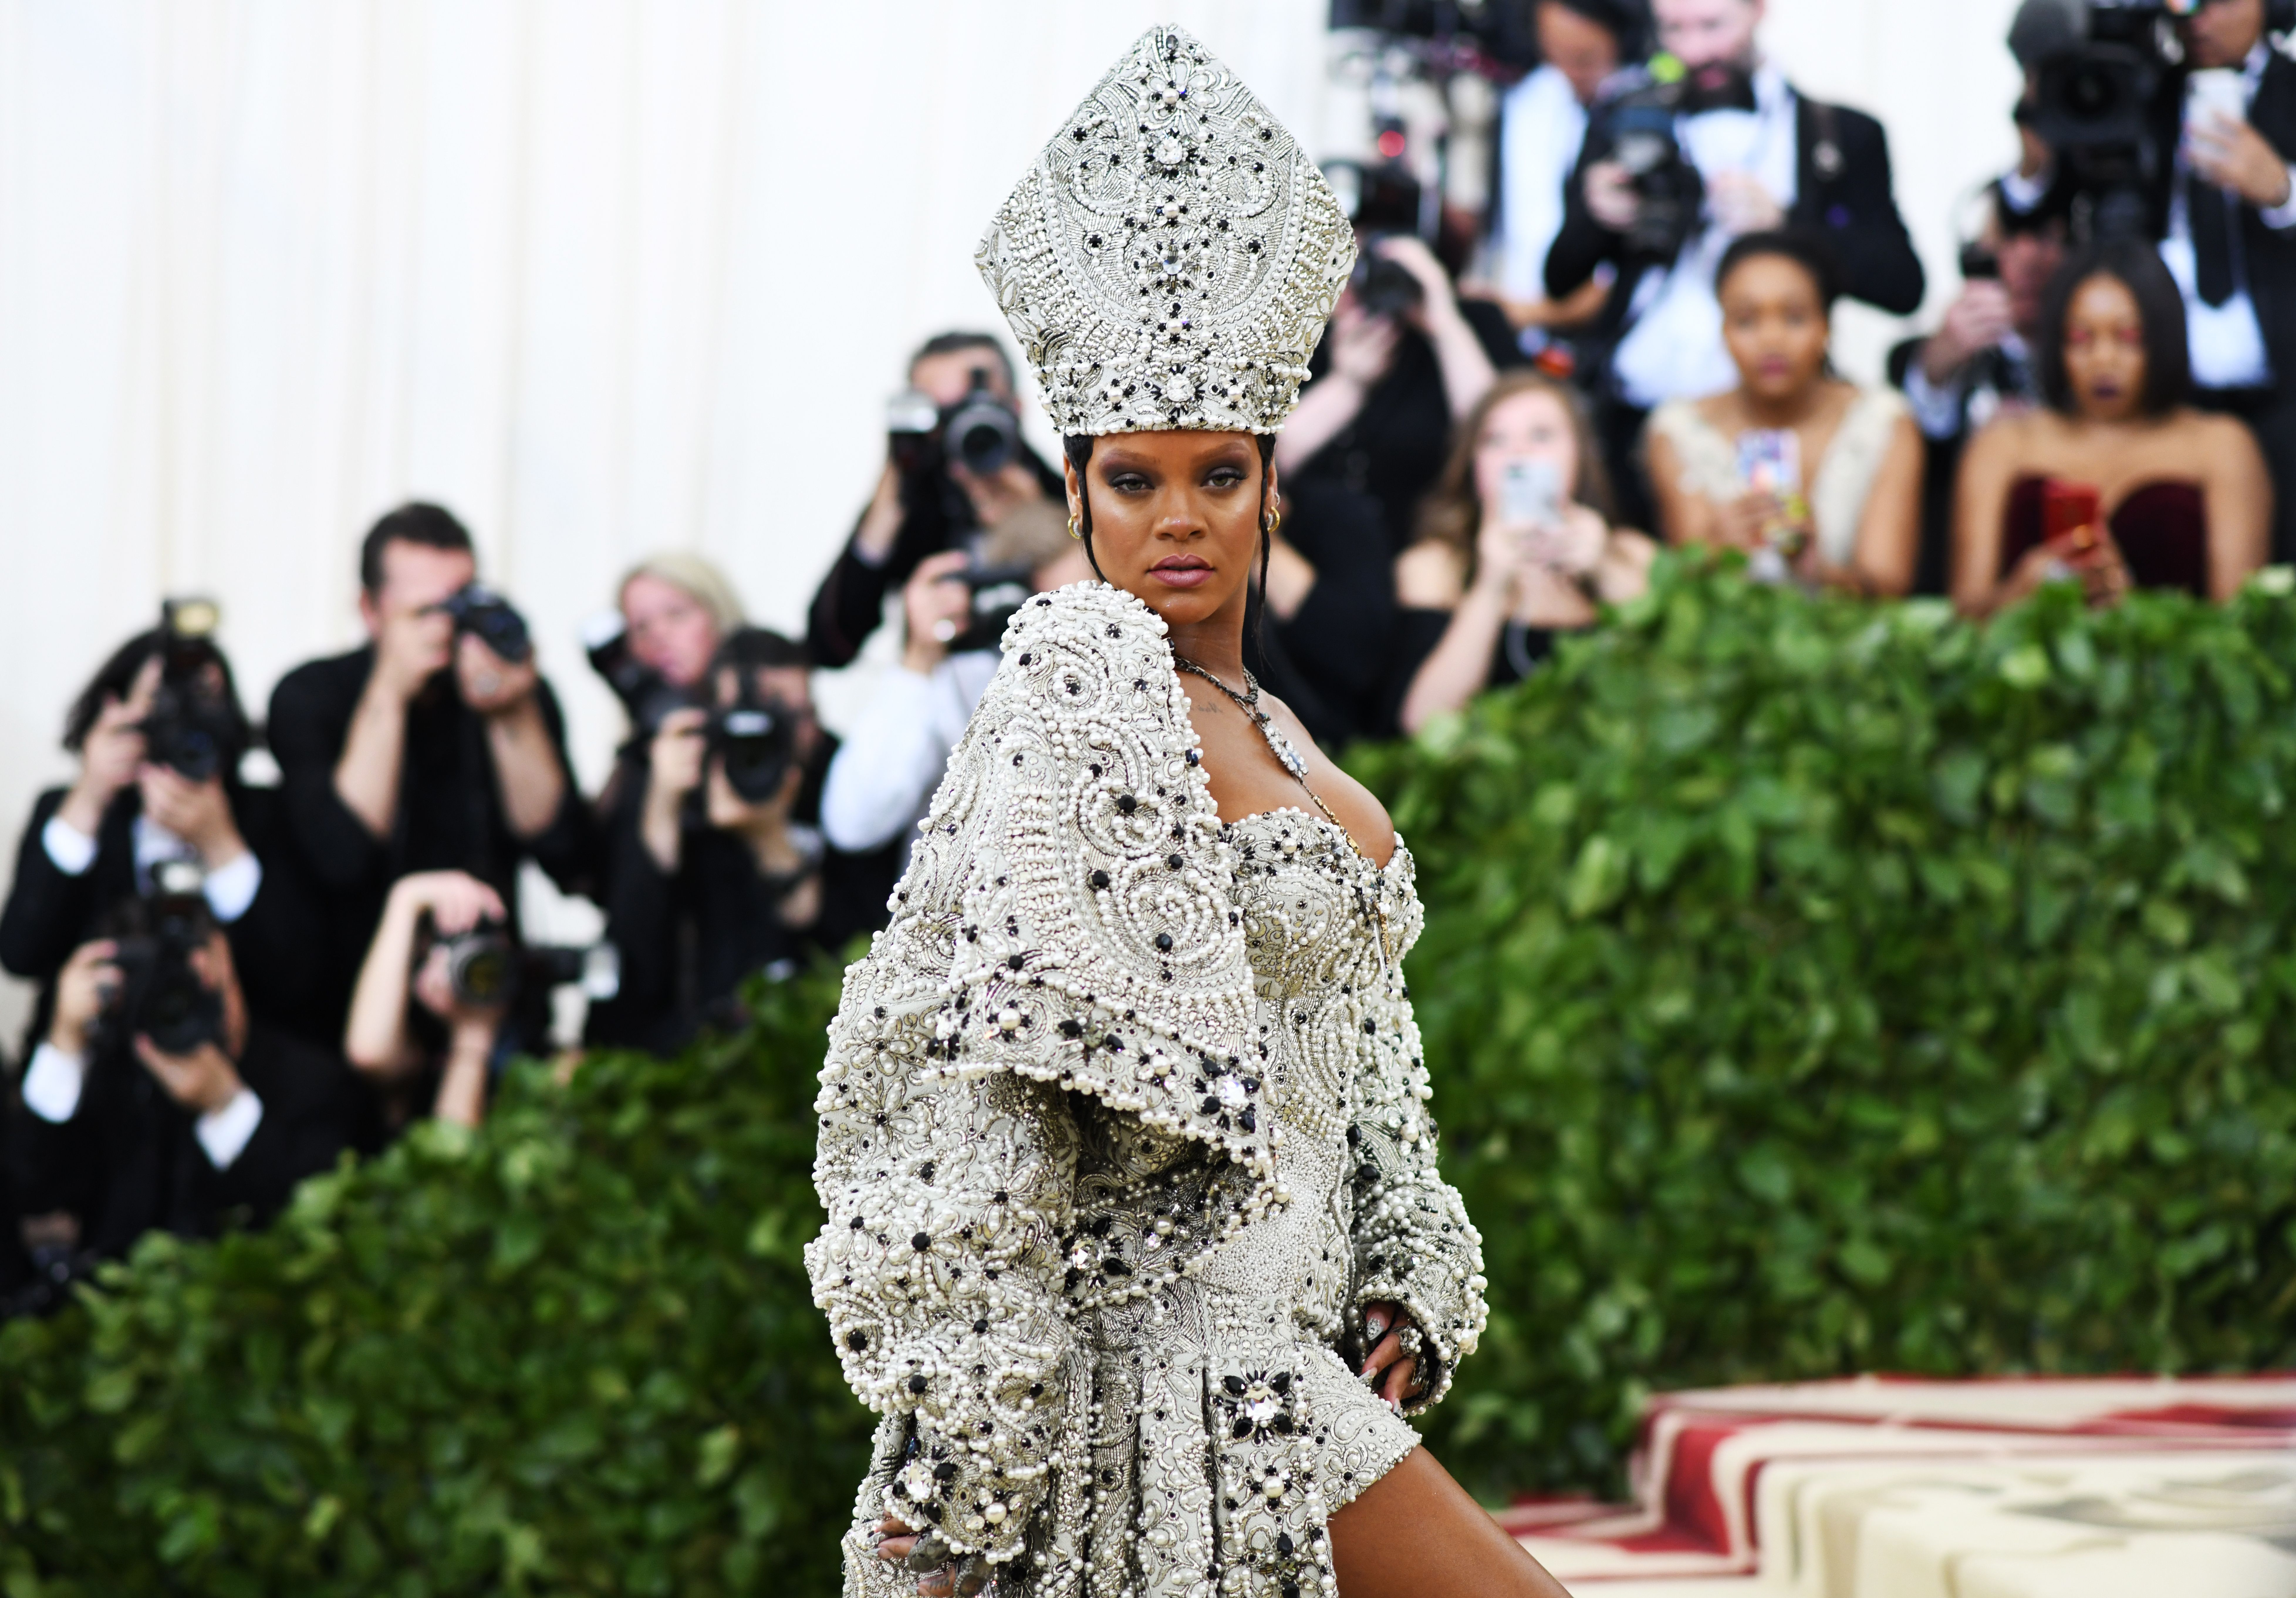 Photos: Trains, Halos, And Rihanna As The Pope At 2018 Met Gala